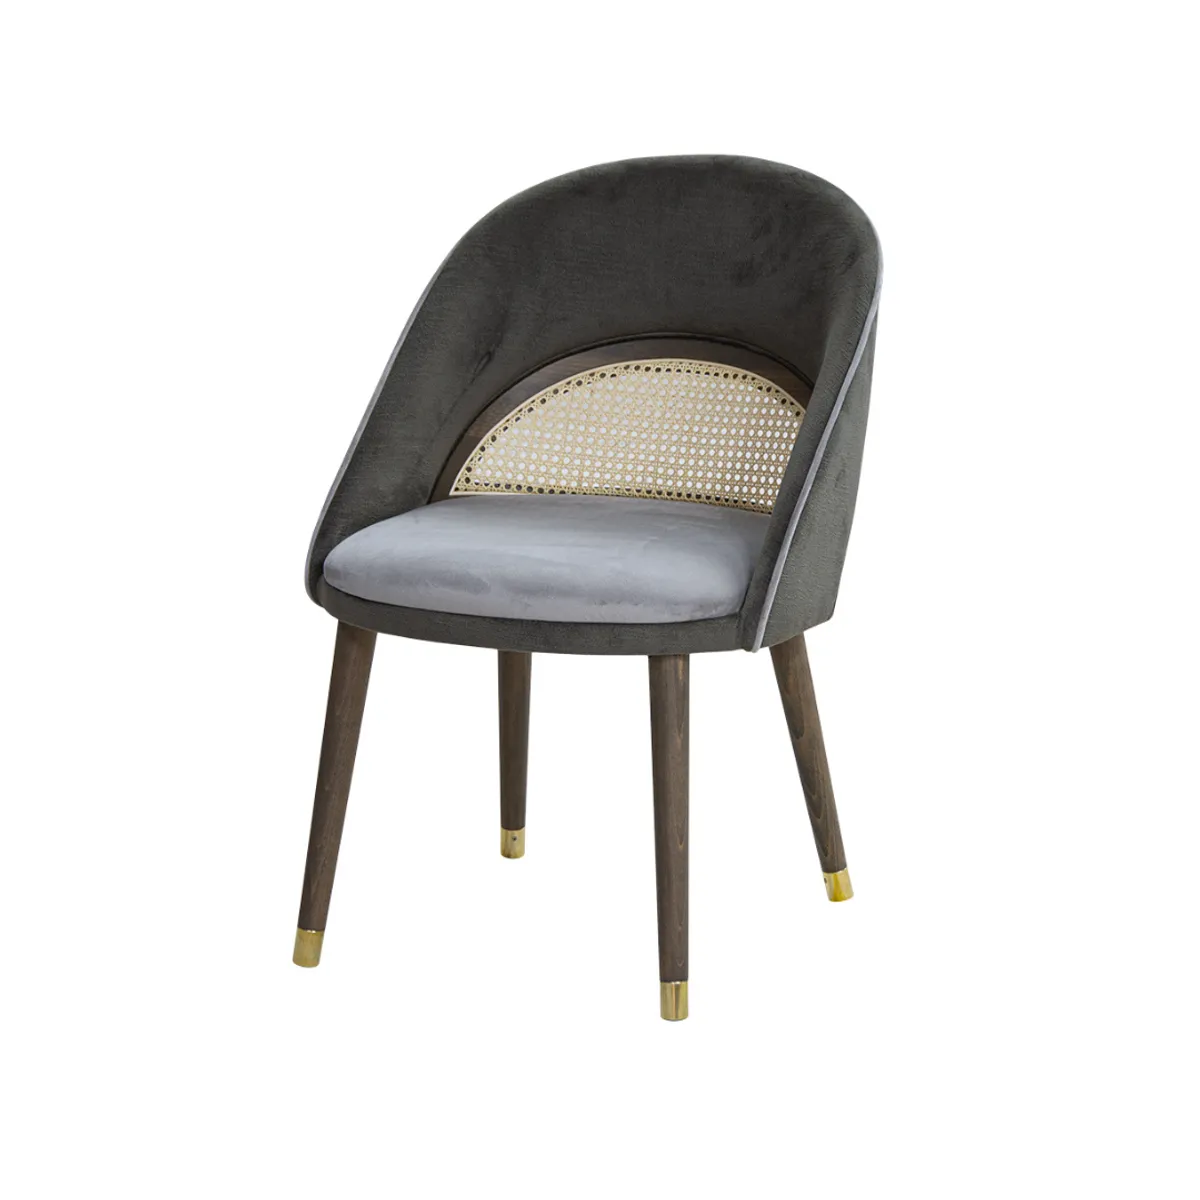 Marilyn cane chair 1